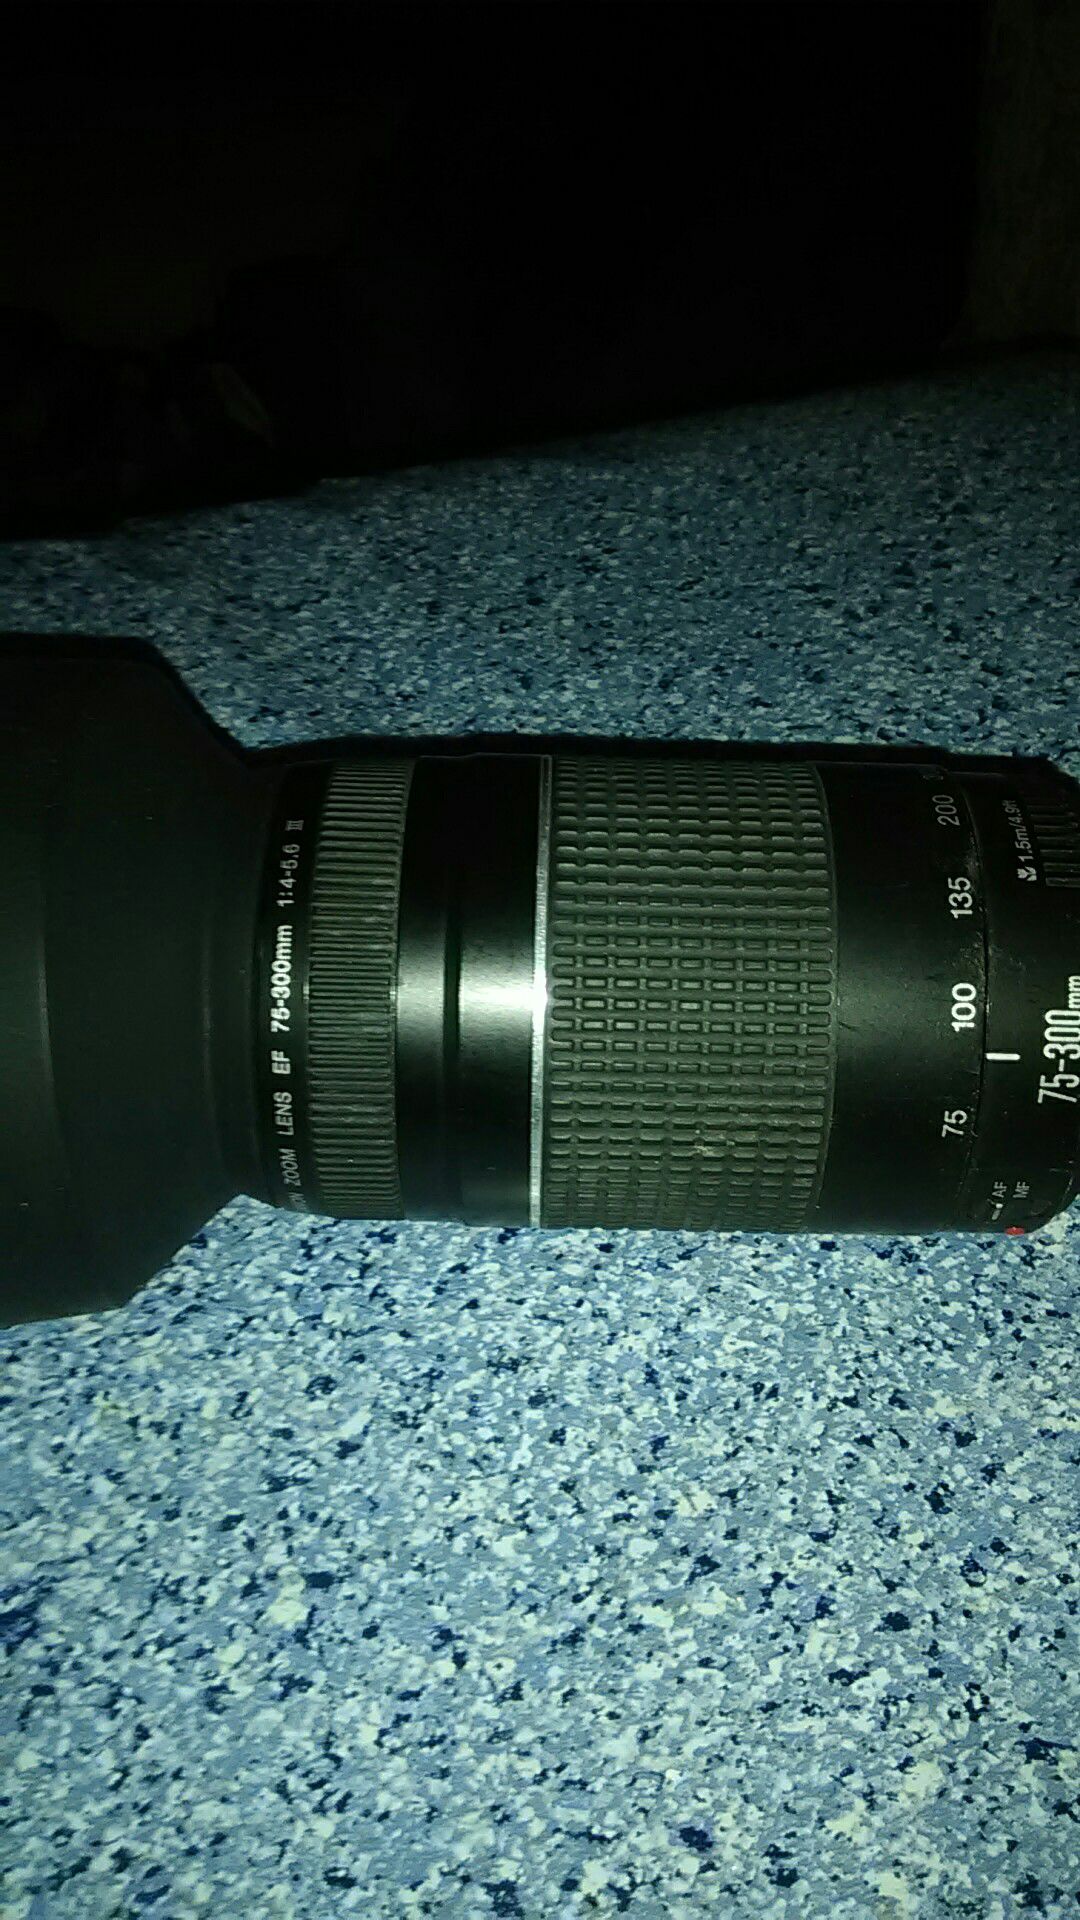 Canon zoom lens ex 75-300mm